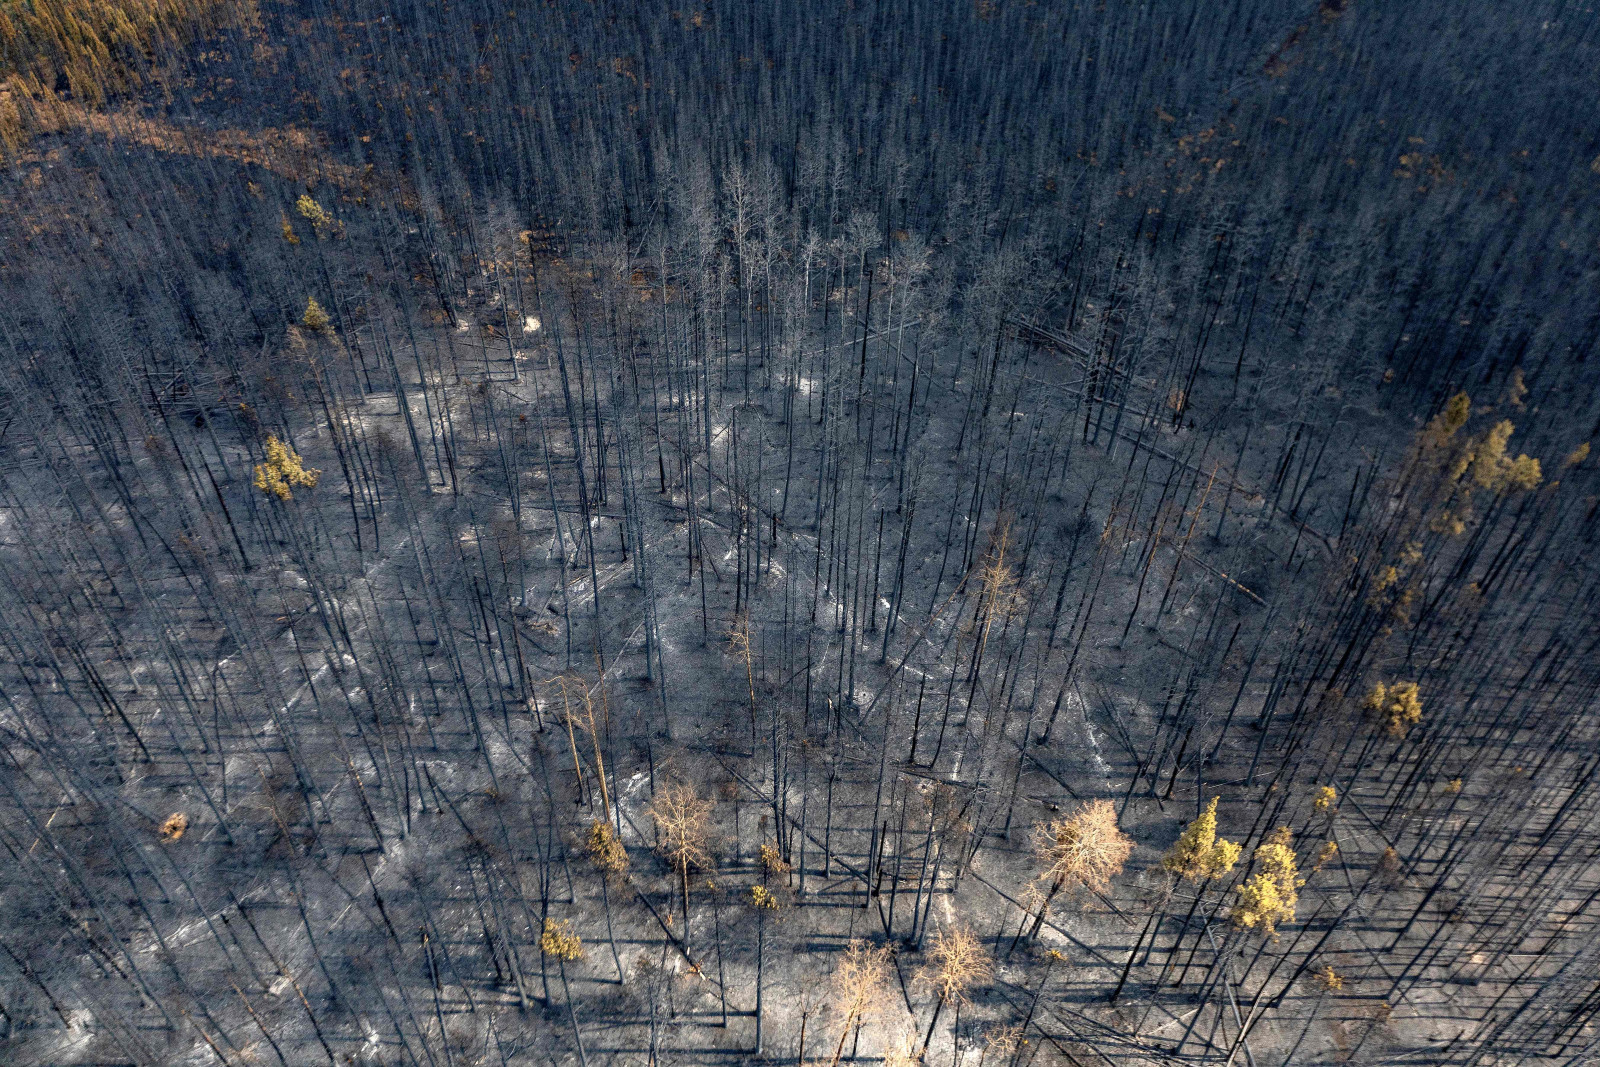 Photo of dead trees in an ashy landscape